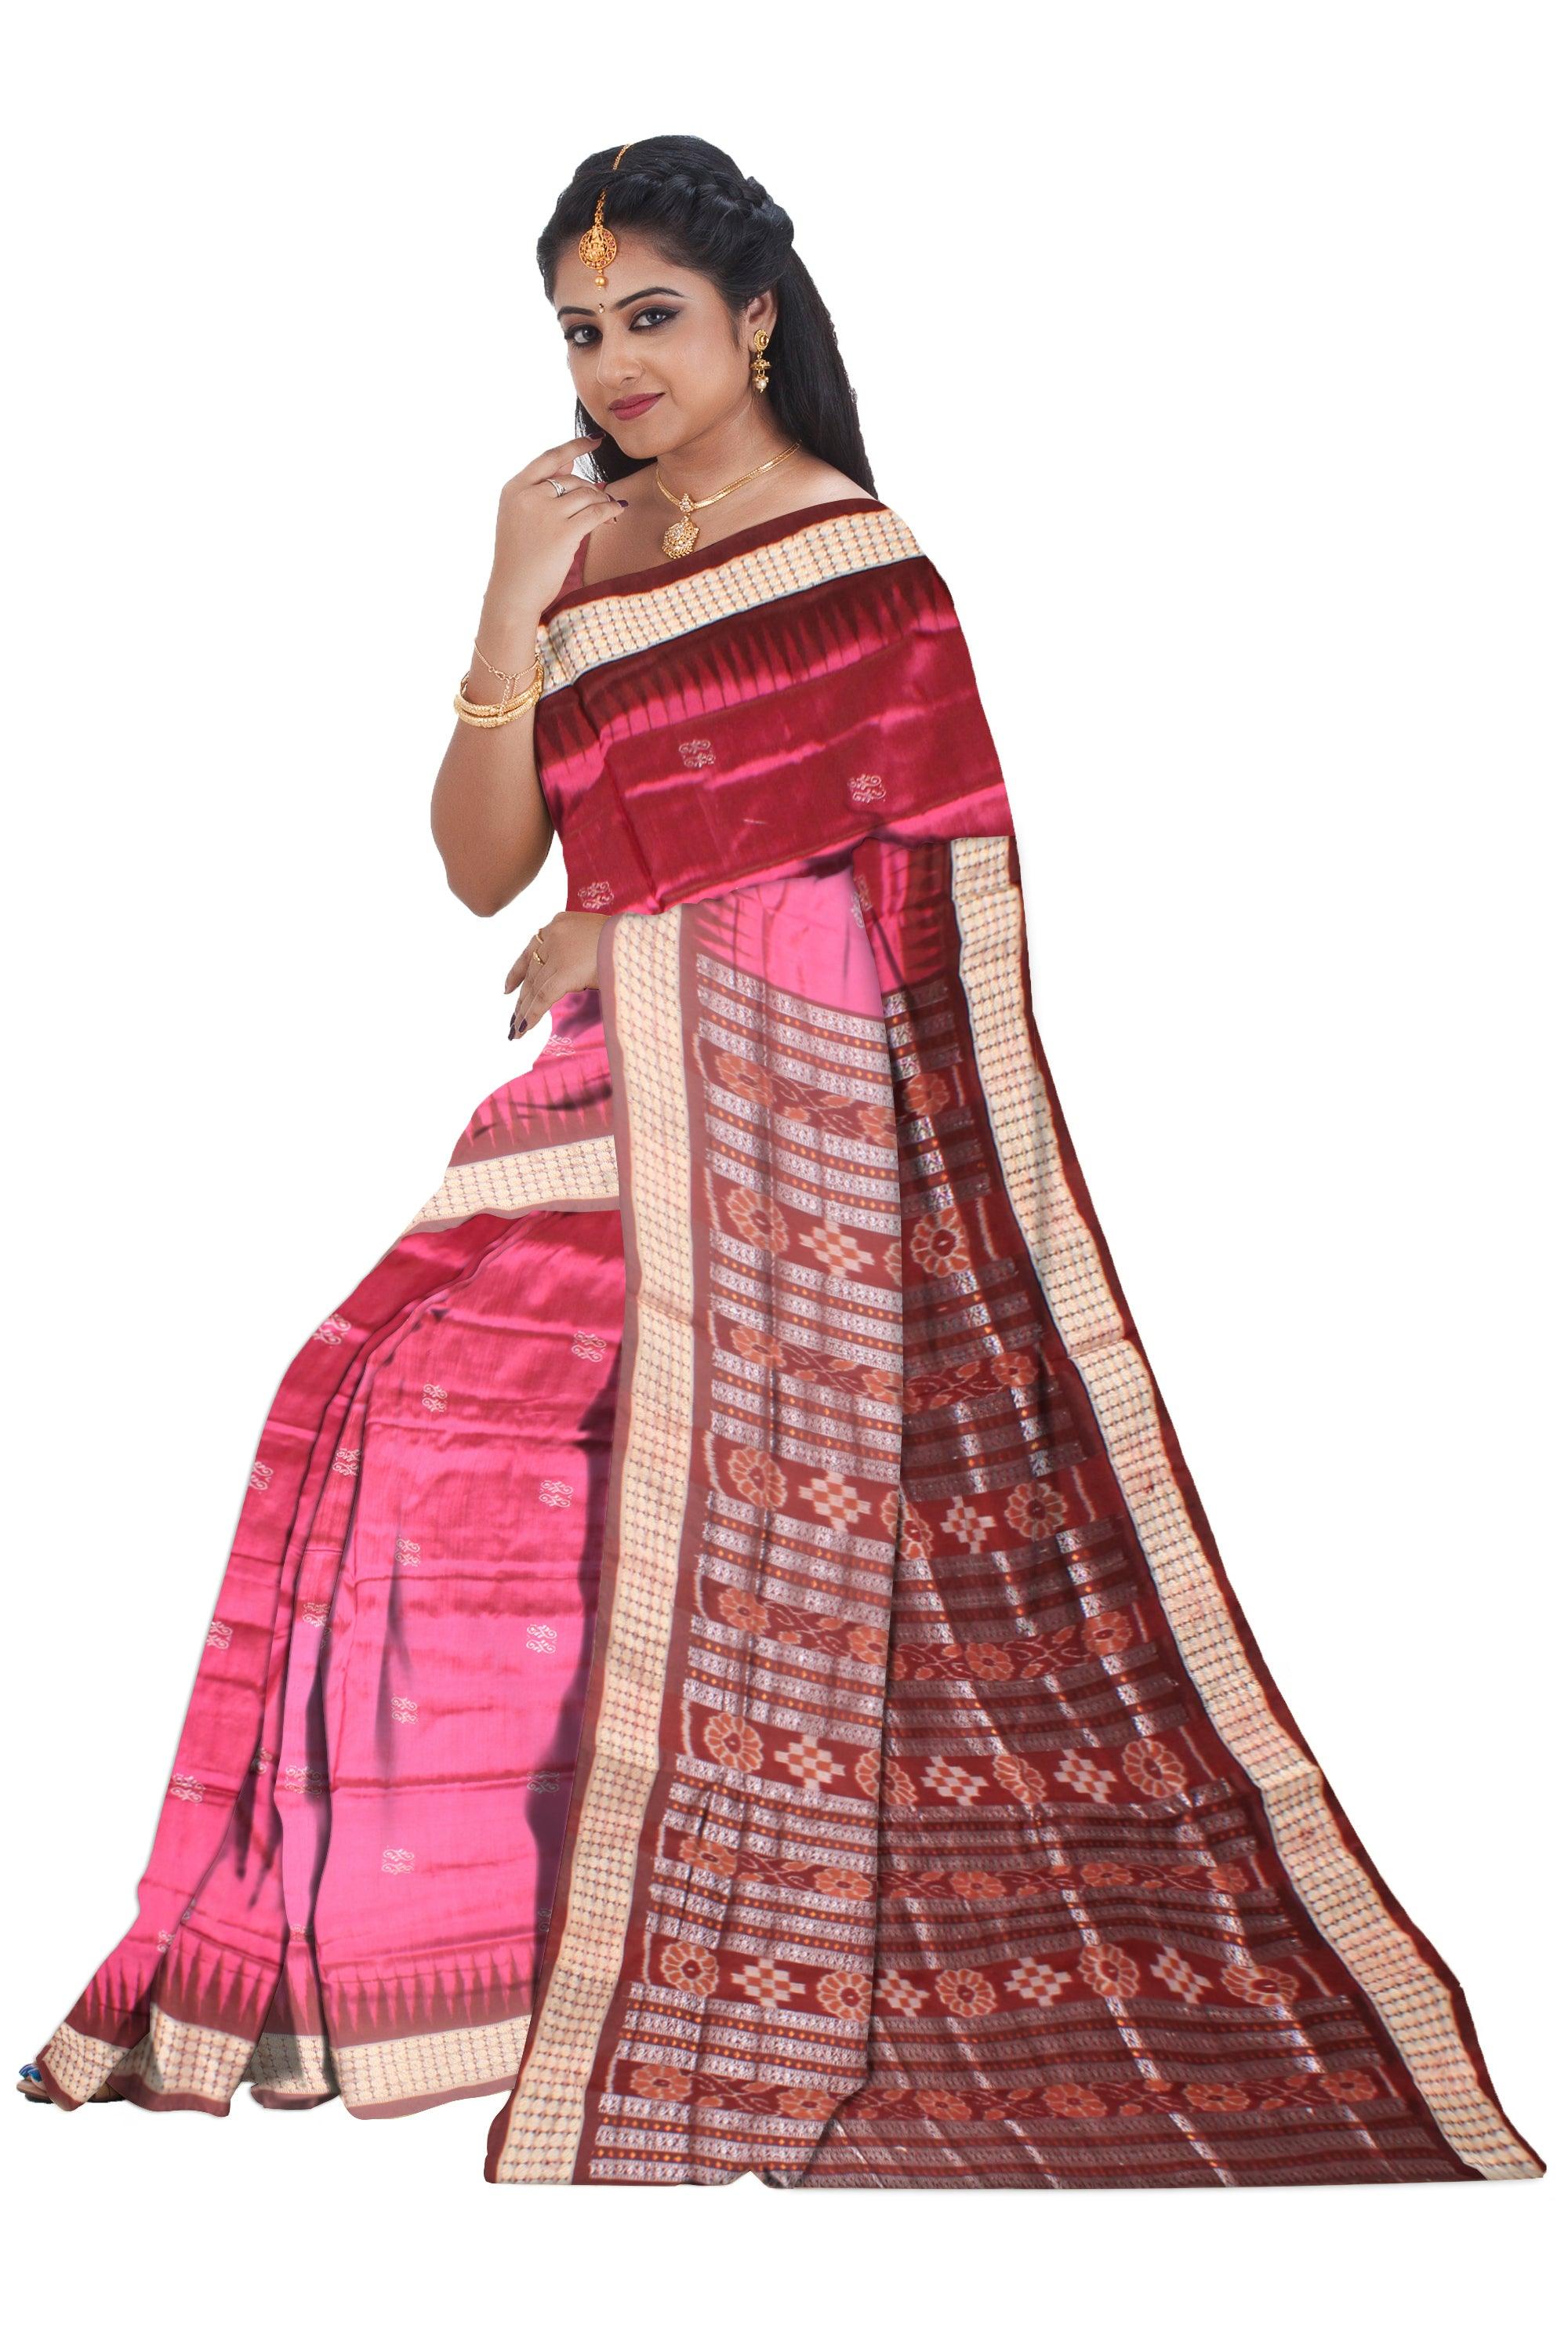 Exclusive sapta print pure pata saree in Pink color available with blouse piece. - Koshali Arts & Crafts Enterprise